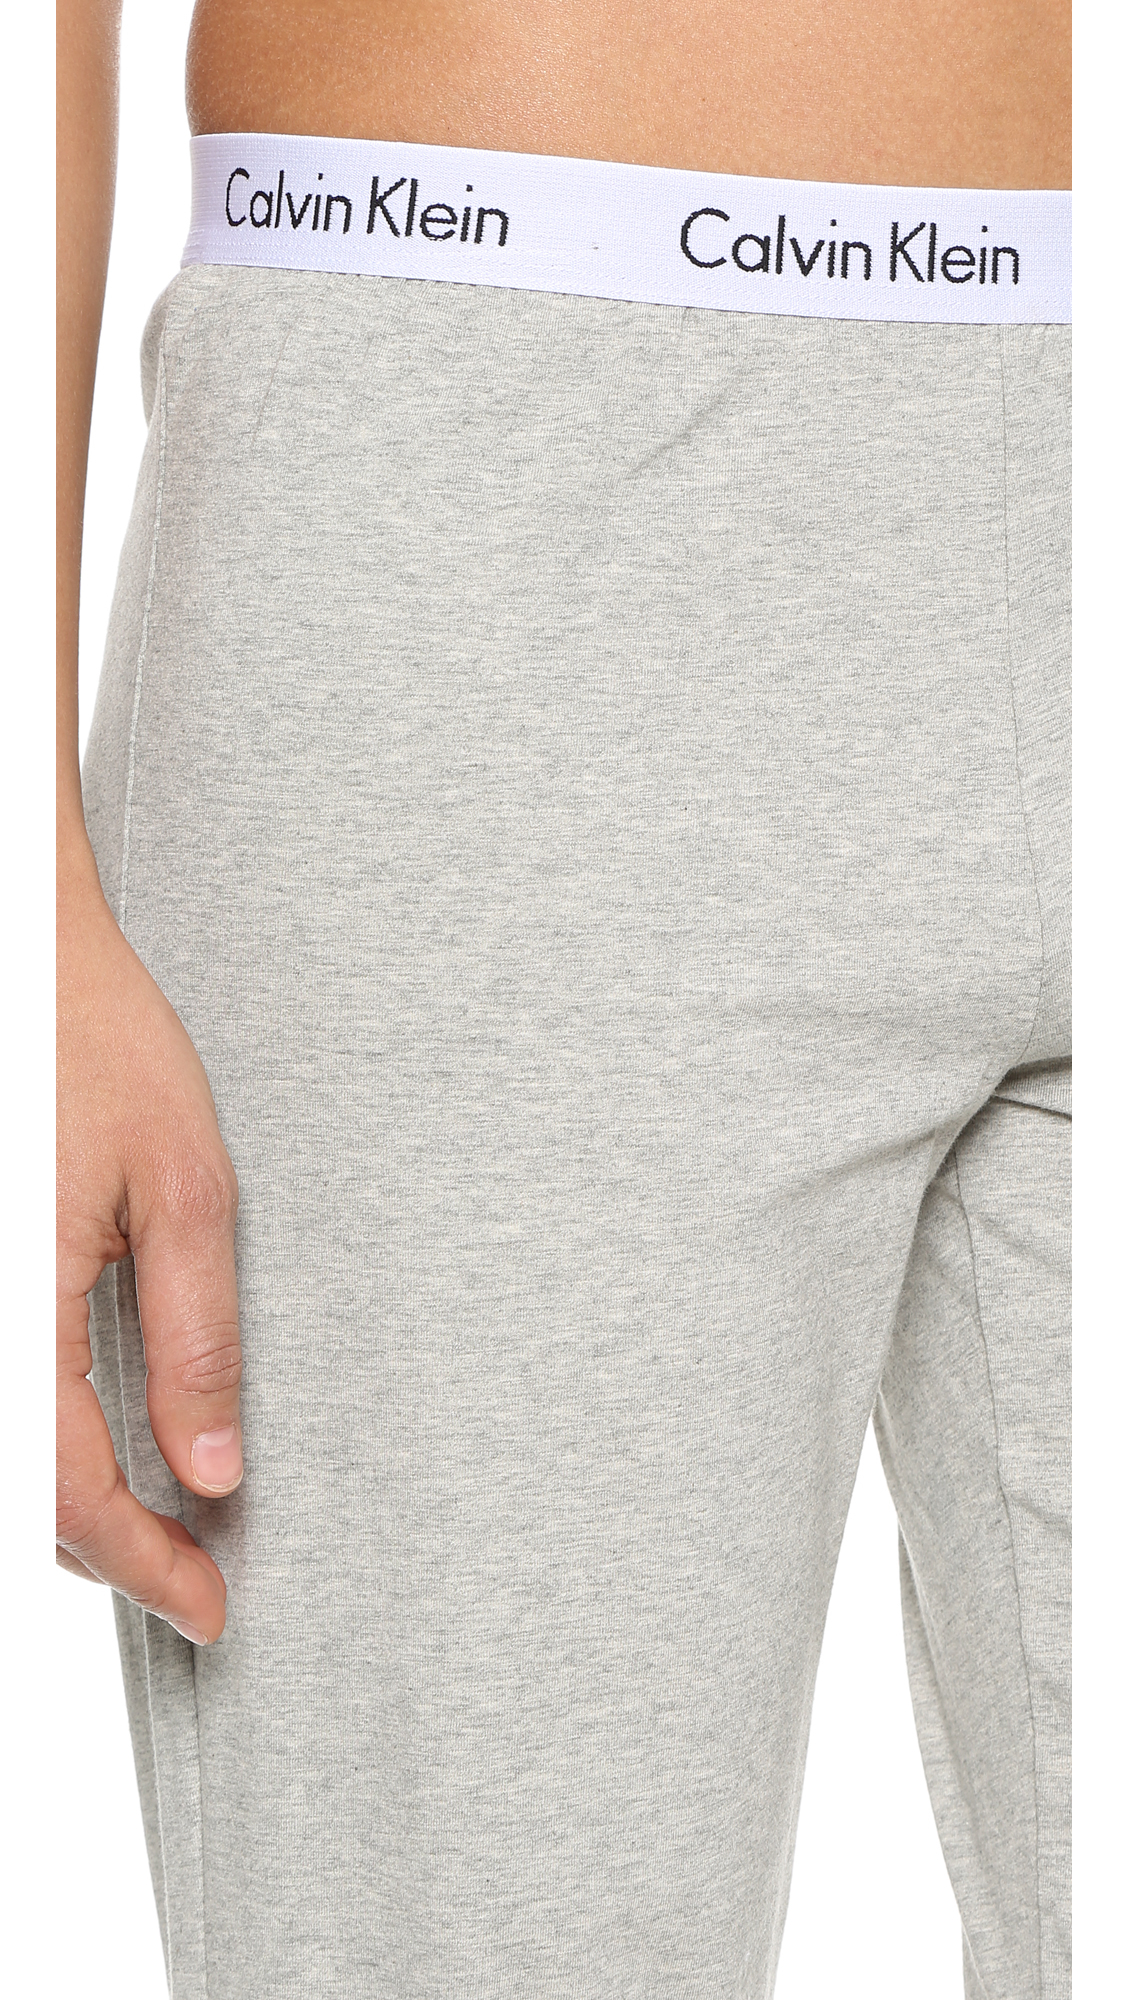 Calvin Klein Cotton Logo Lounge Pants in Grey Heather (Gray) - Lyst